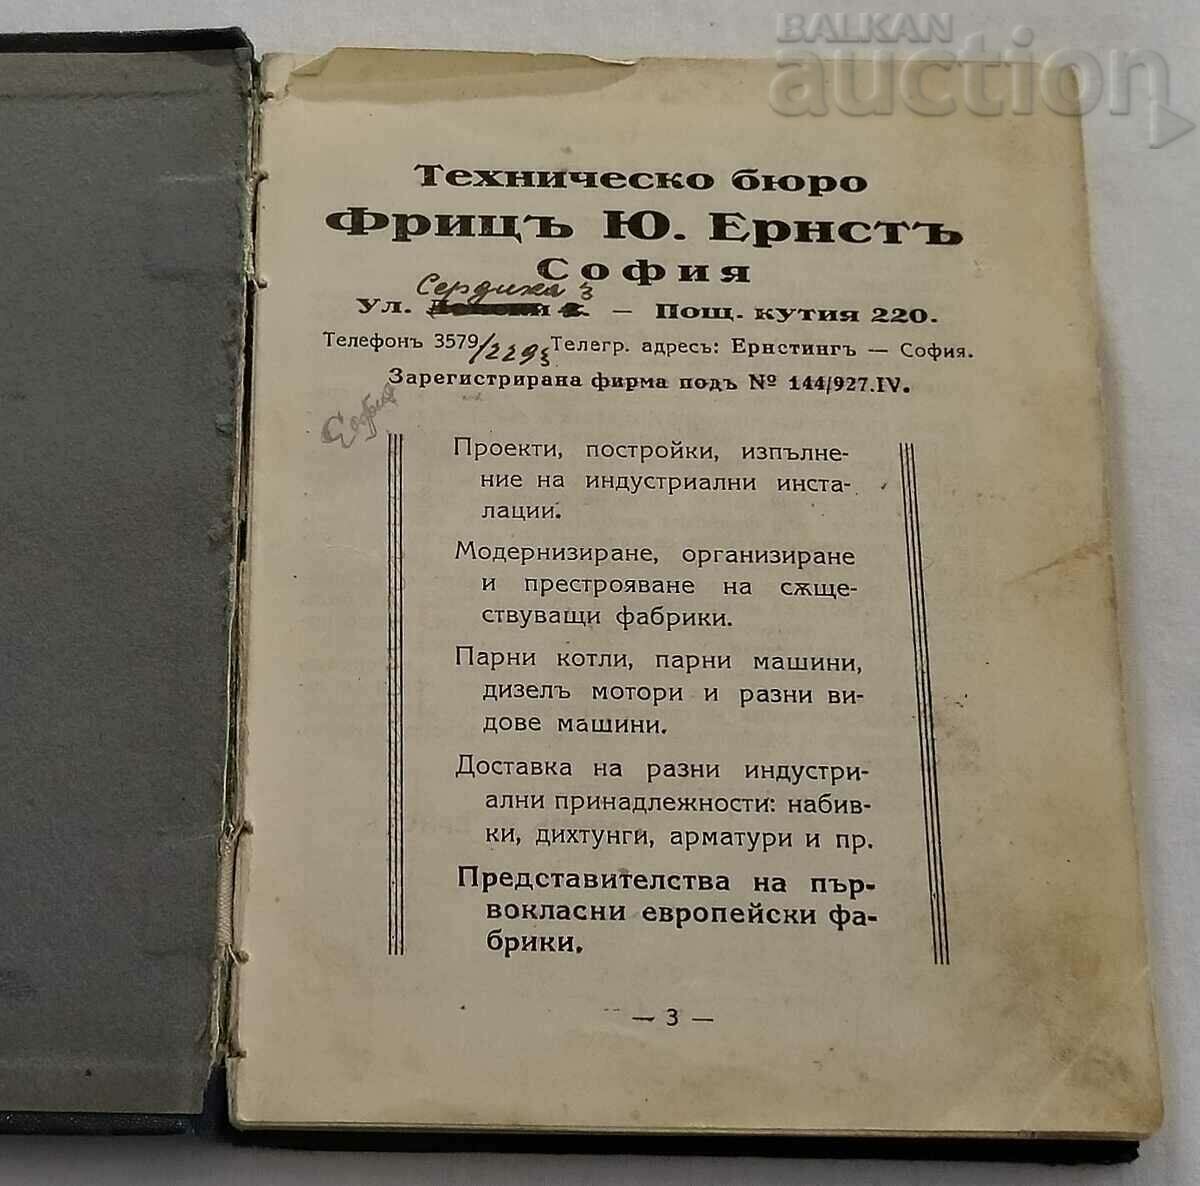 TECHNICAL CALENDAR 1929 TECHNICAL BUREAU ERNST SOFIA